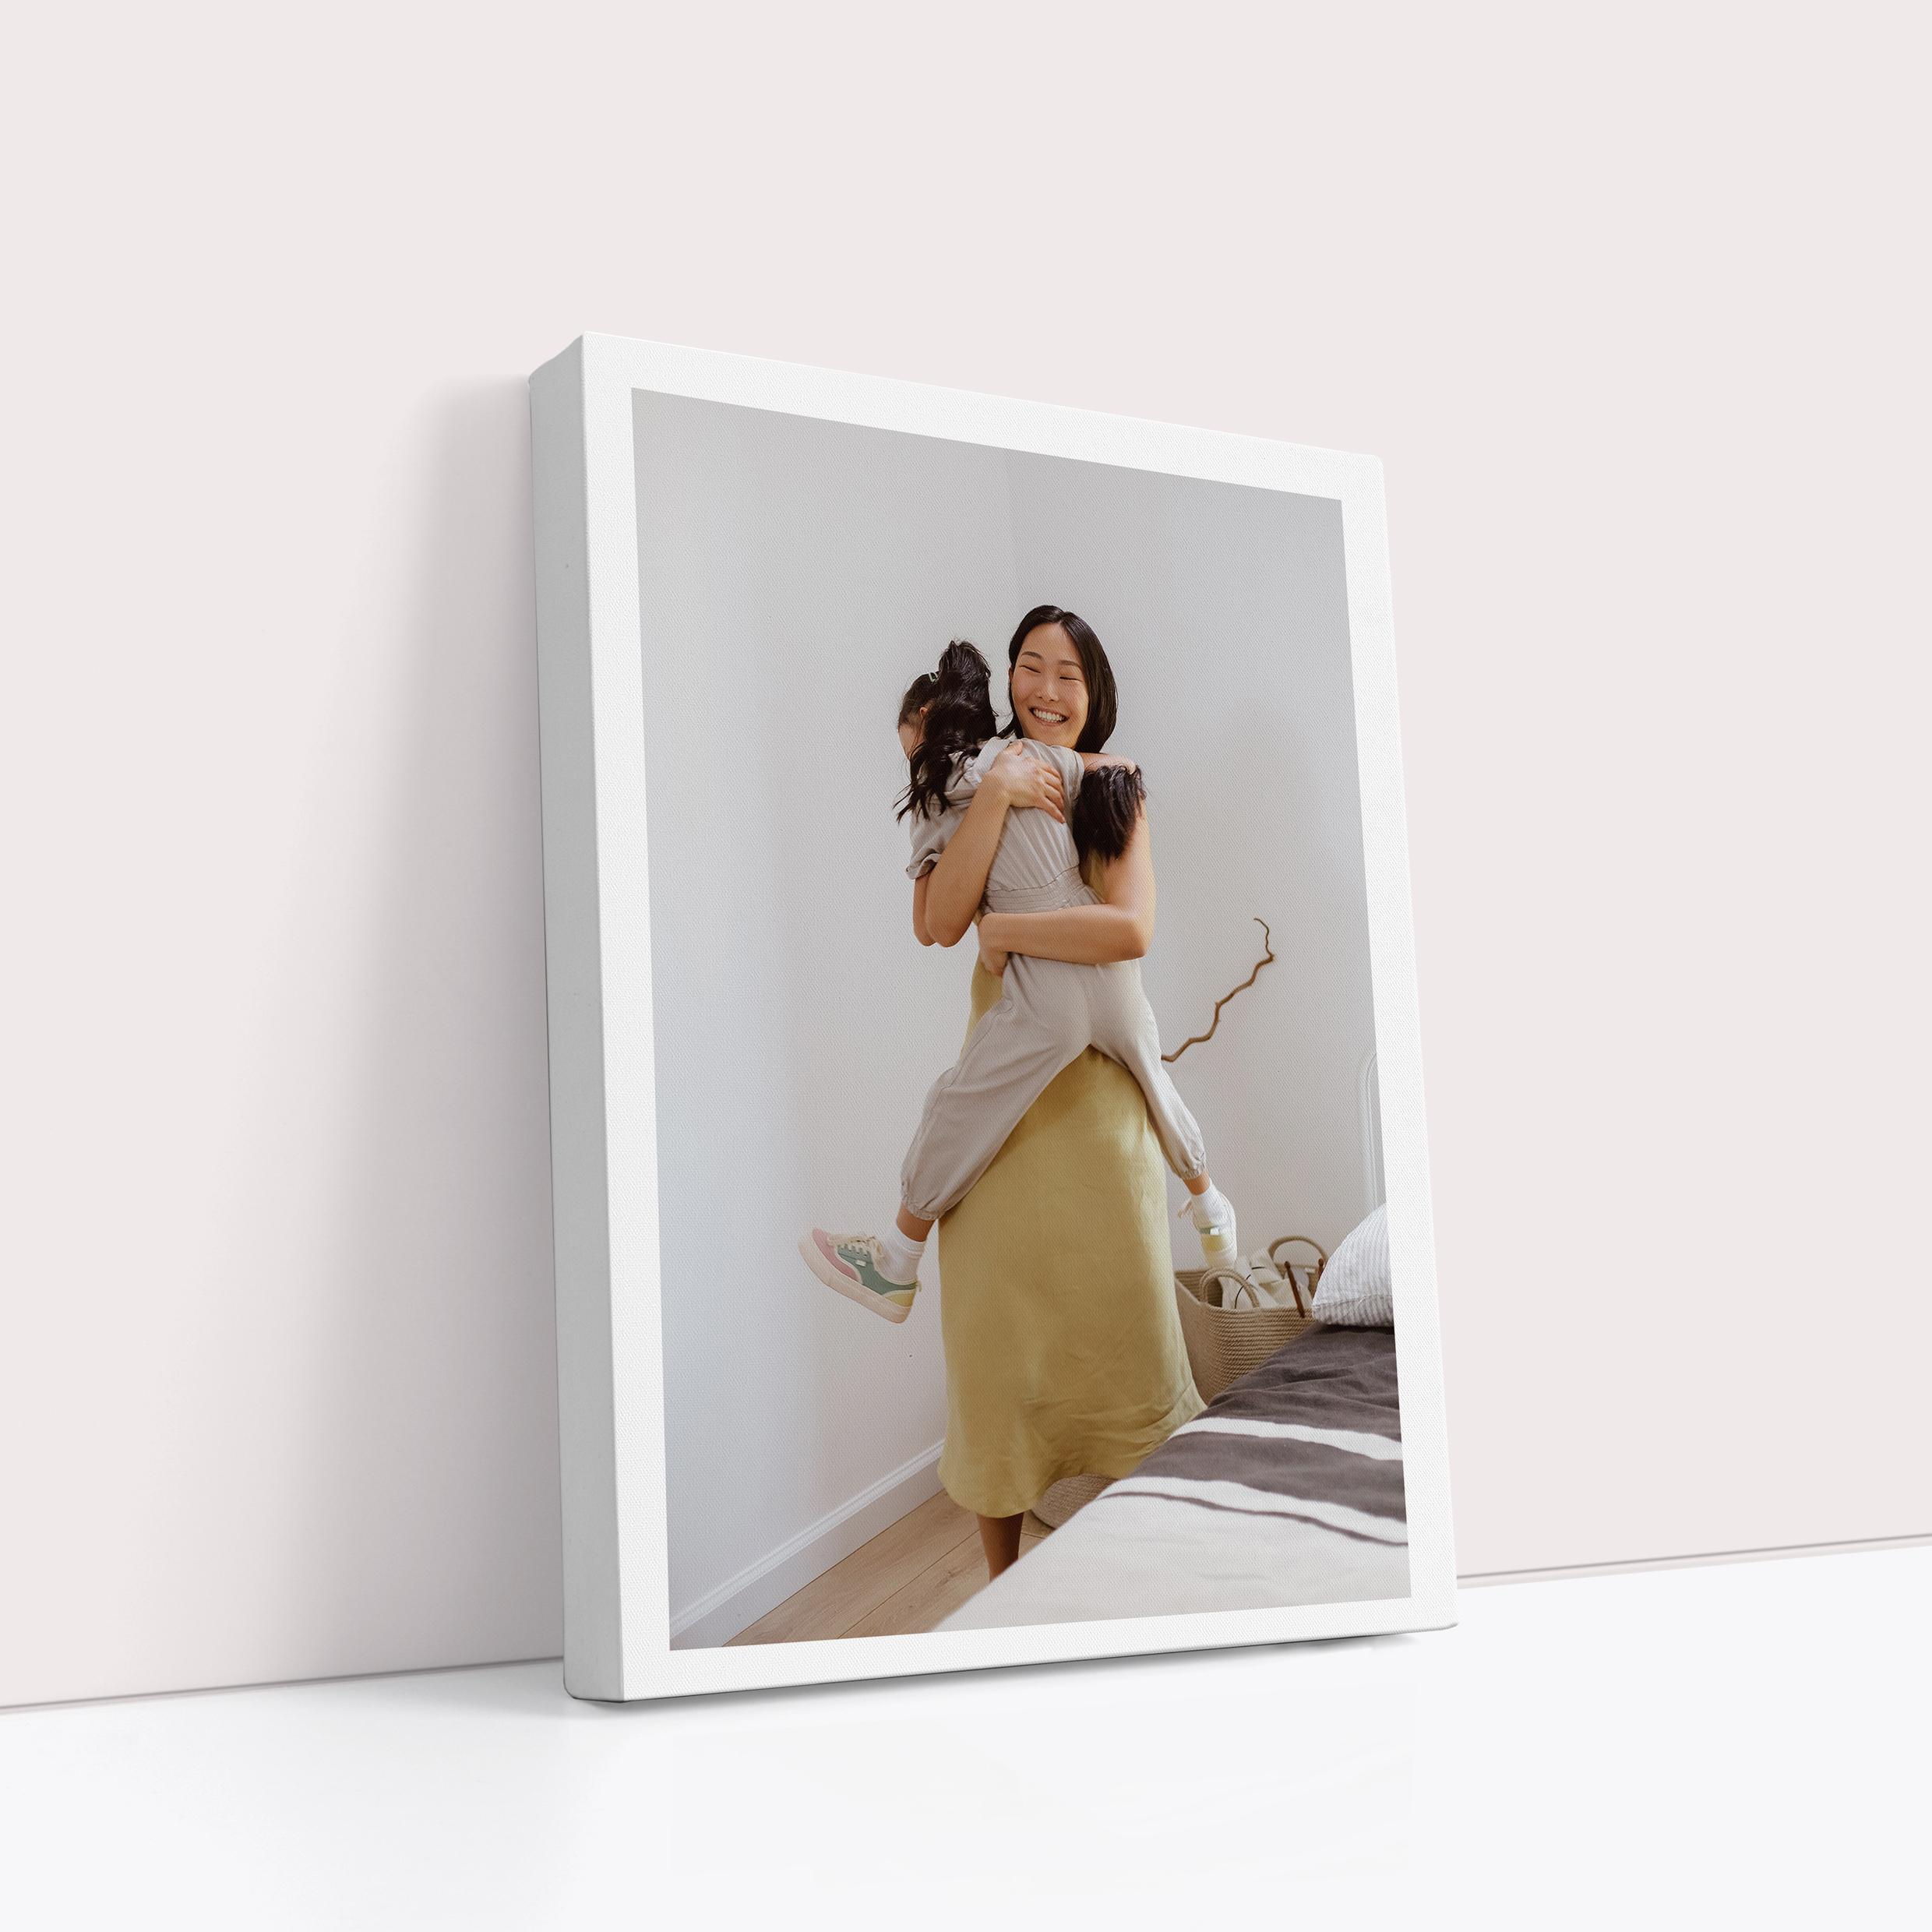  Medium White Frame Personalised Stretch Canvas Print - Elegant Photo Display